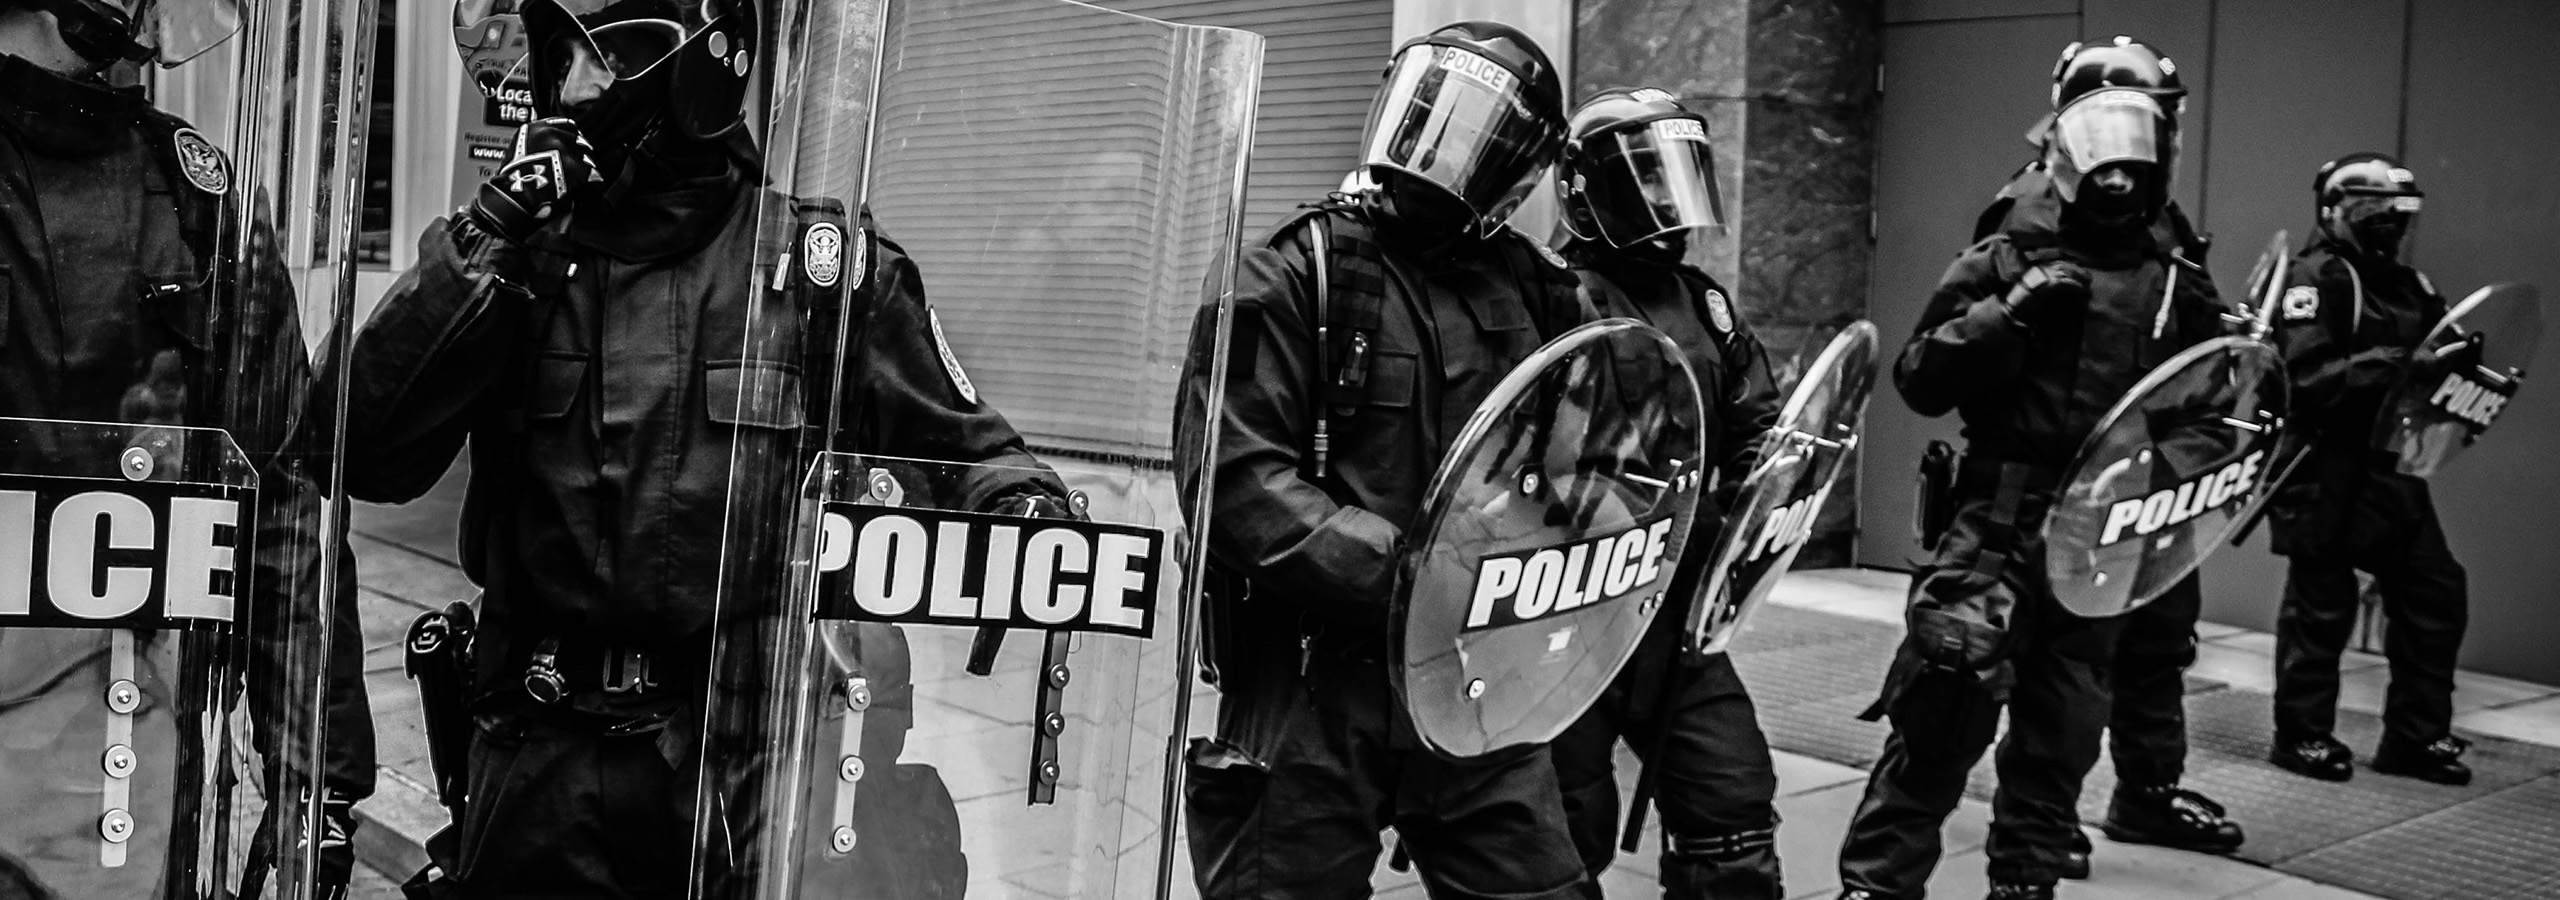 carousel police riot squad